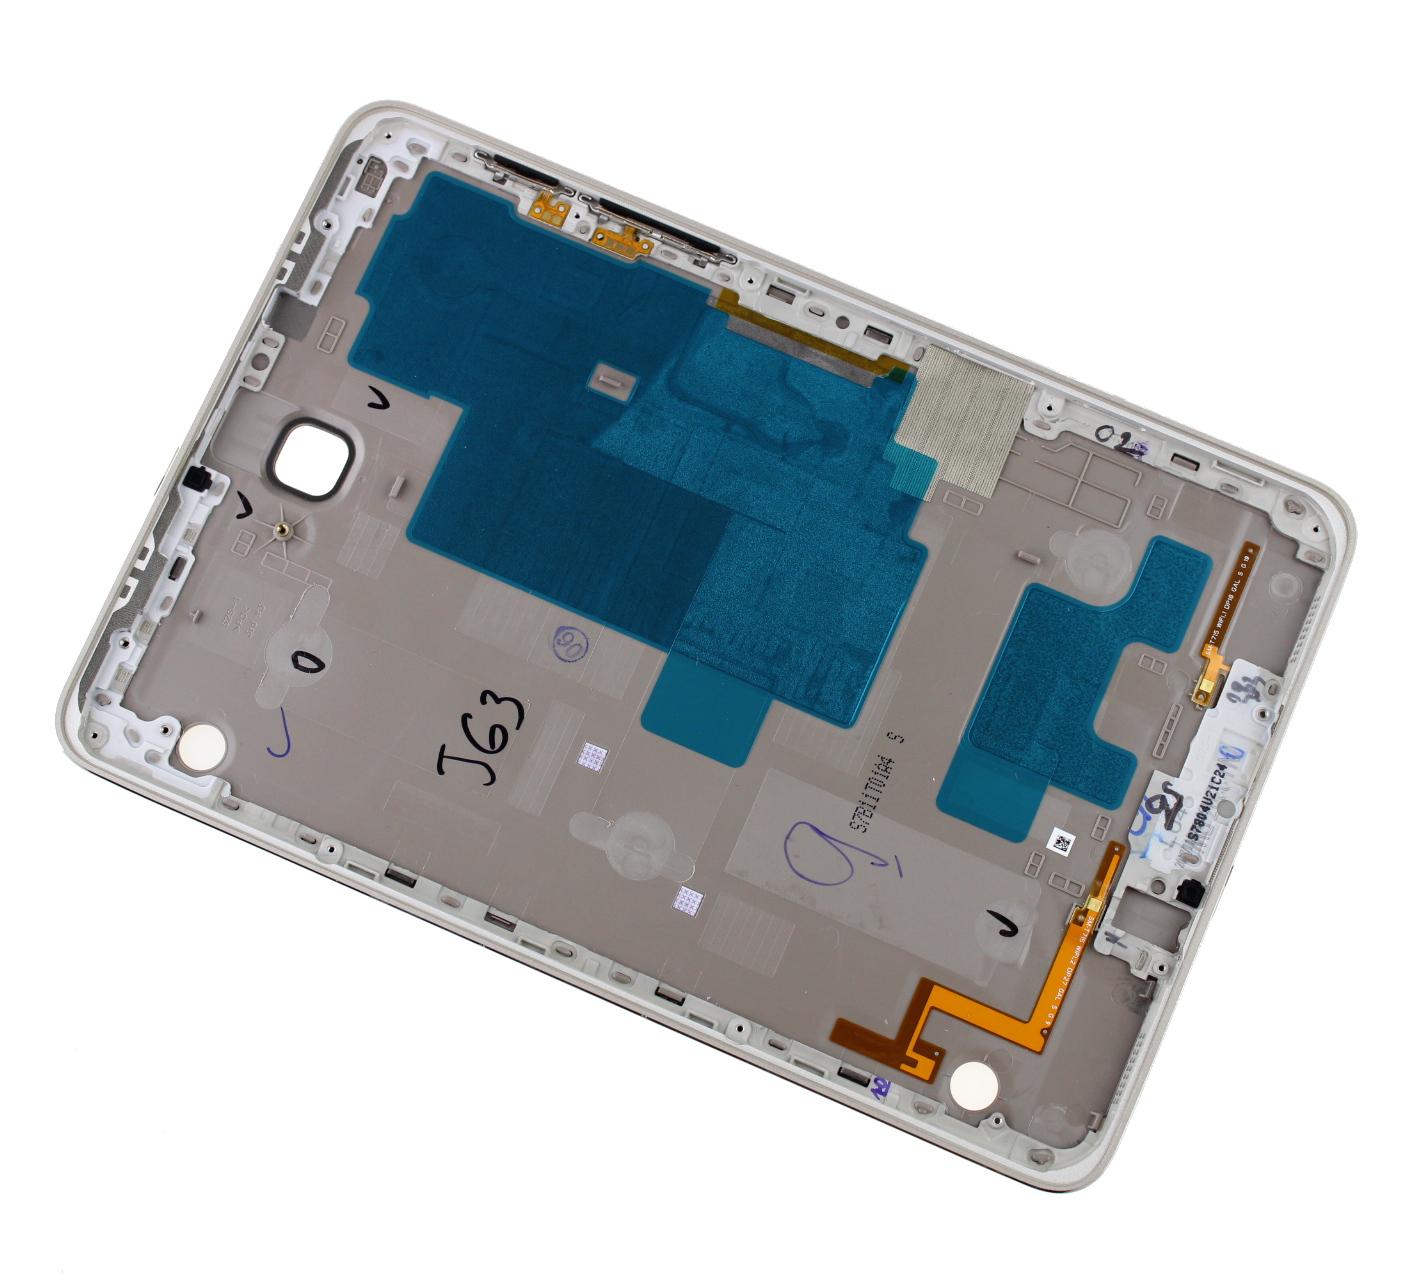 Original battery cover Samsung SM-T719 Galaxy Tab 2 gold